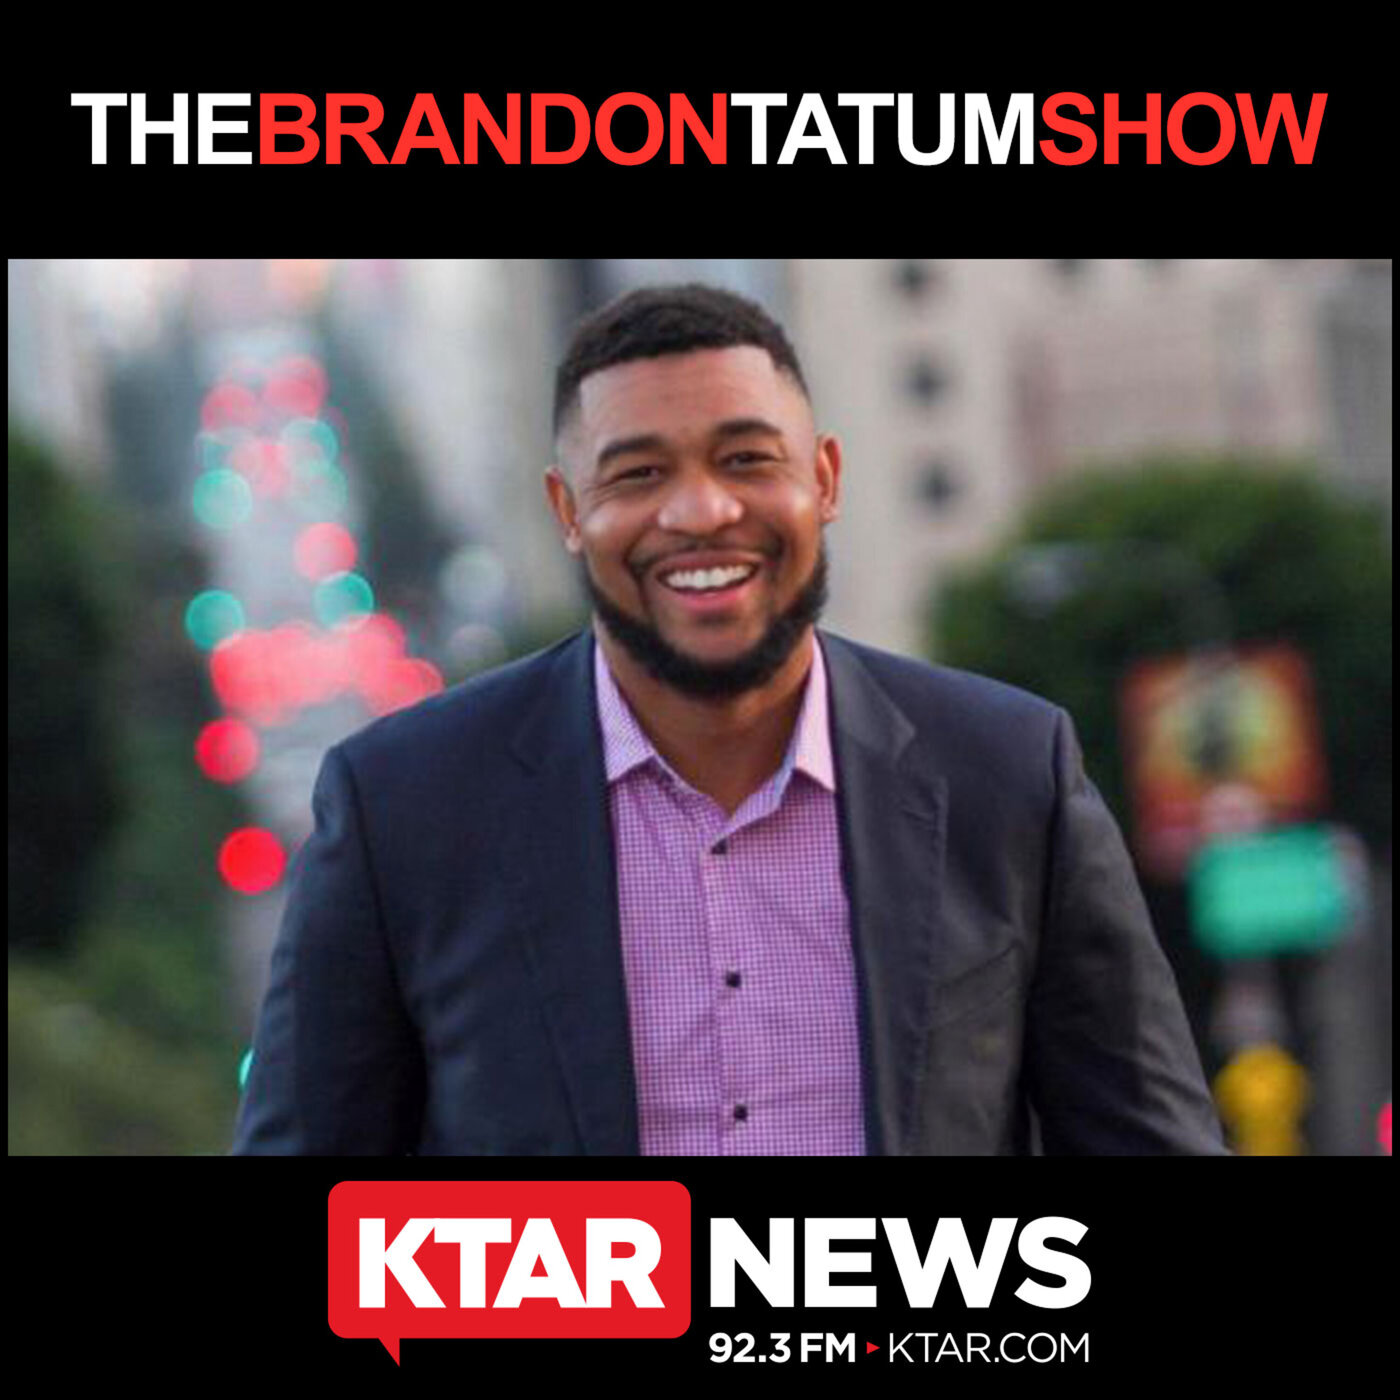 February 15, 2020 - The Brandon Tatum Show